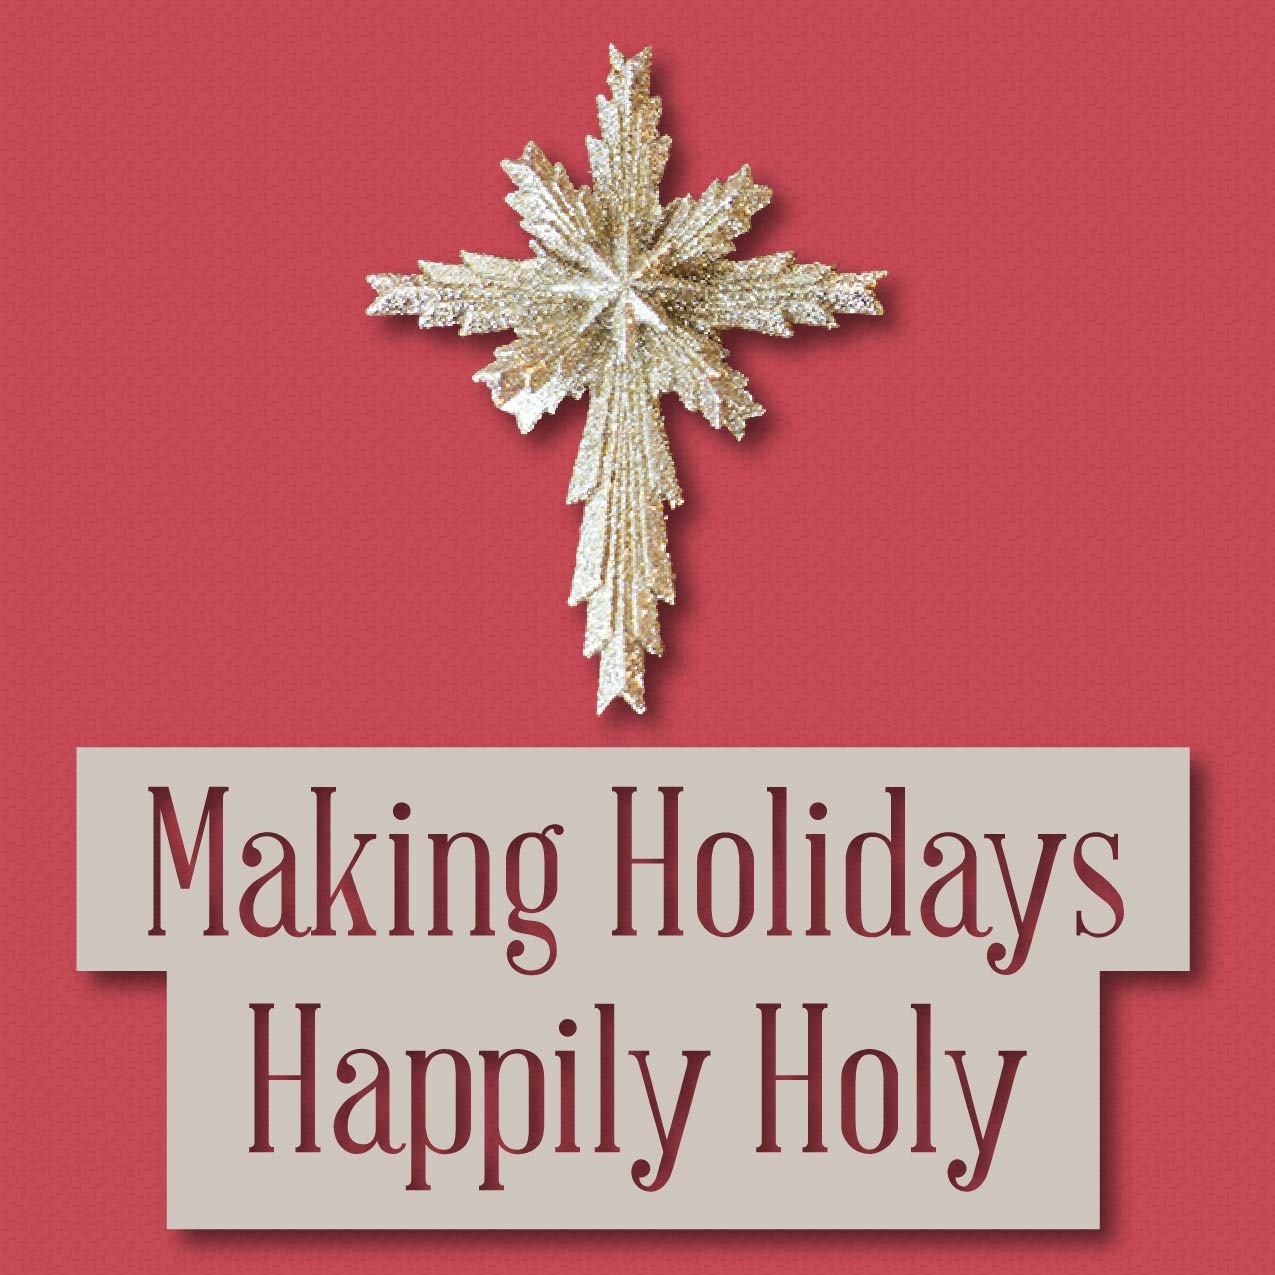 Making Holidays Happily Holy